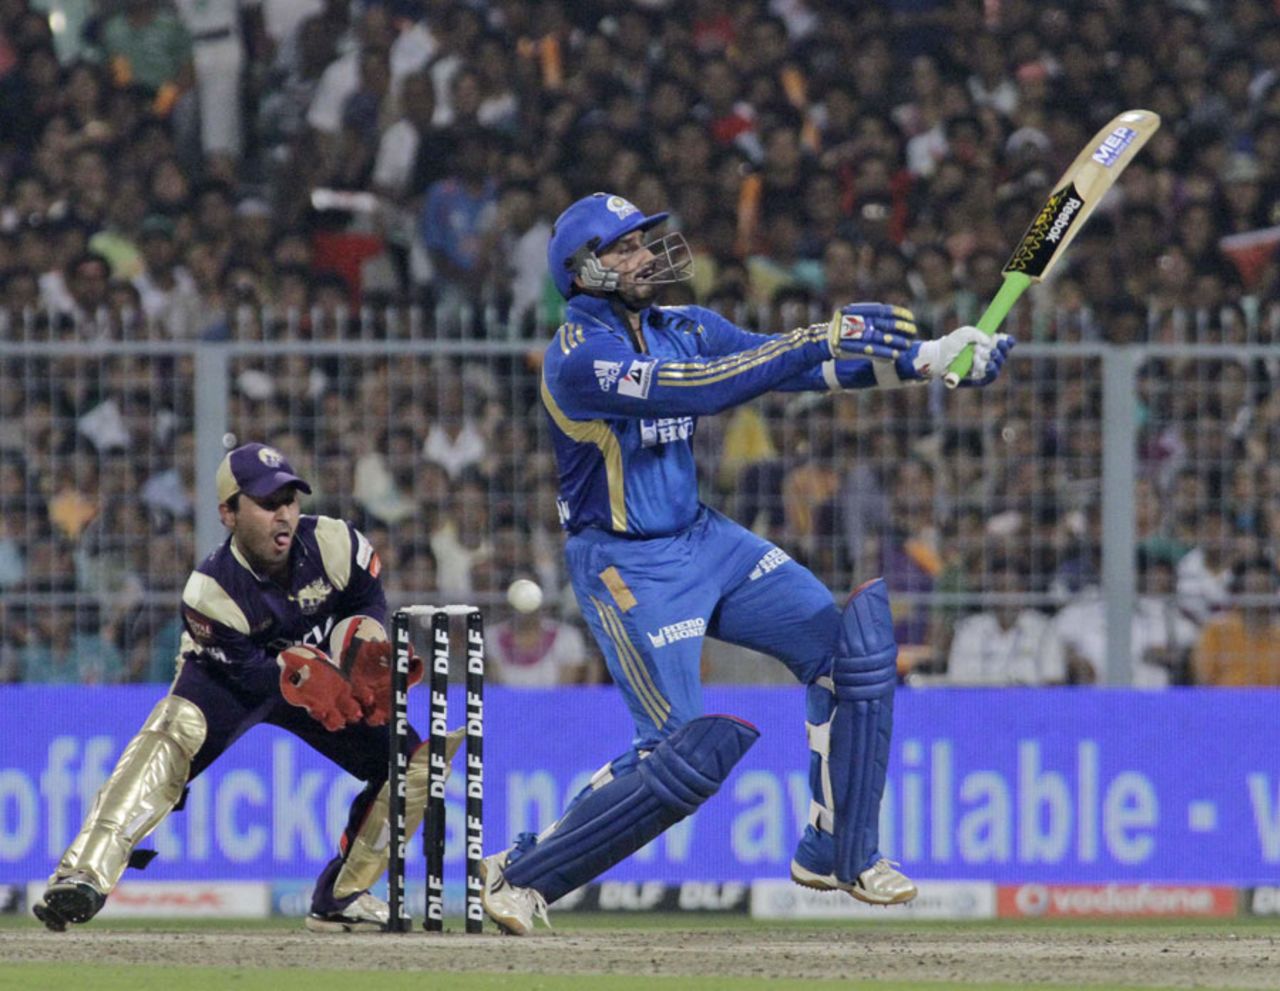 Harbhajan Singh misses one during his cameo, Kolkata Knight Riders v Mumbai Indians, IPL 2011, May 22, 2011